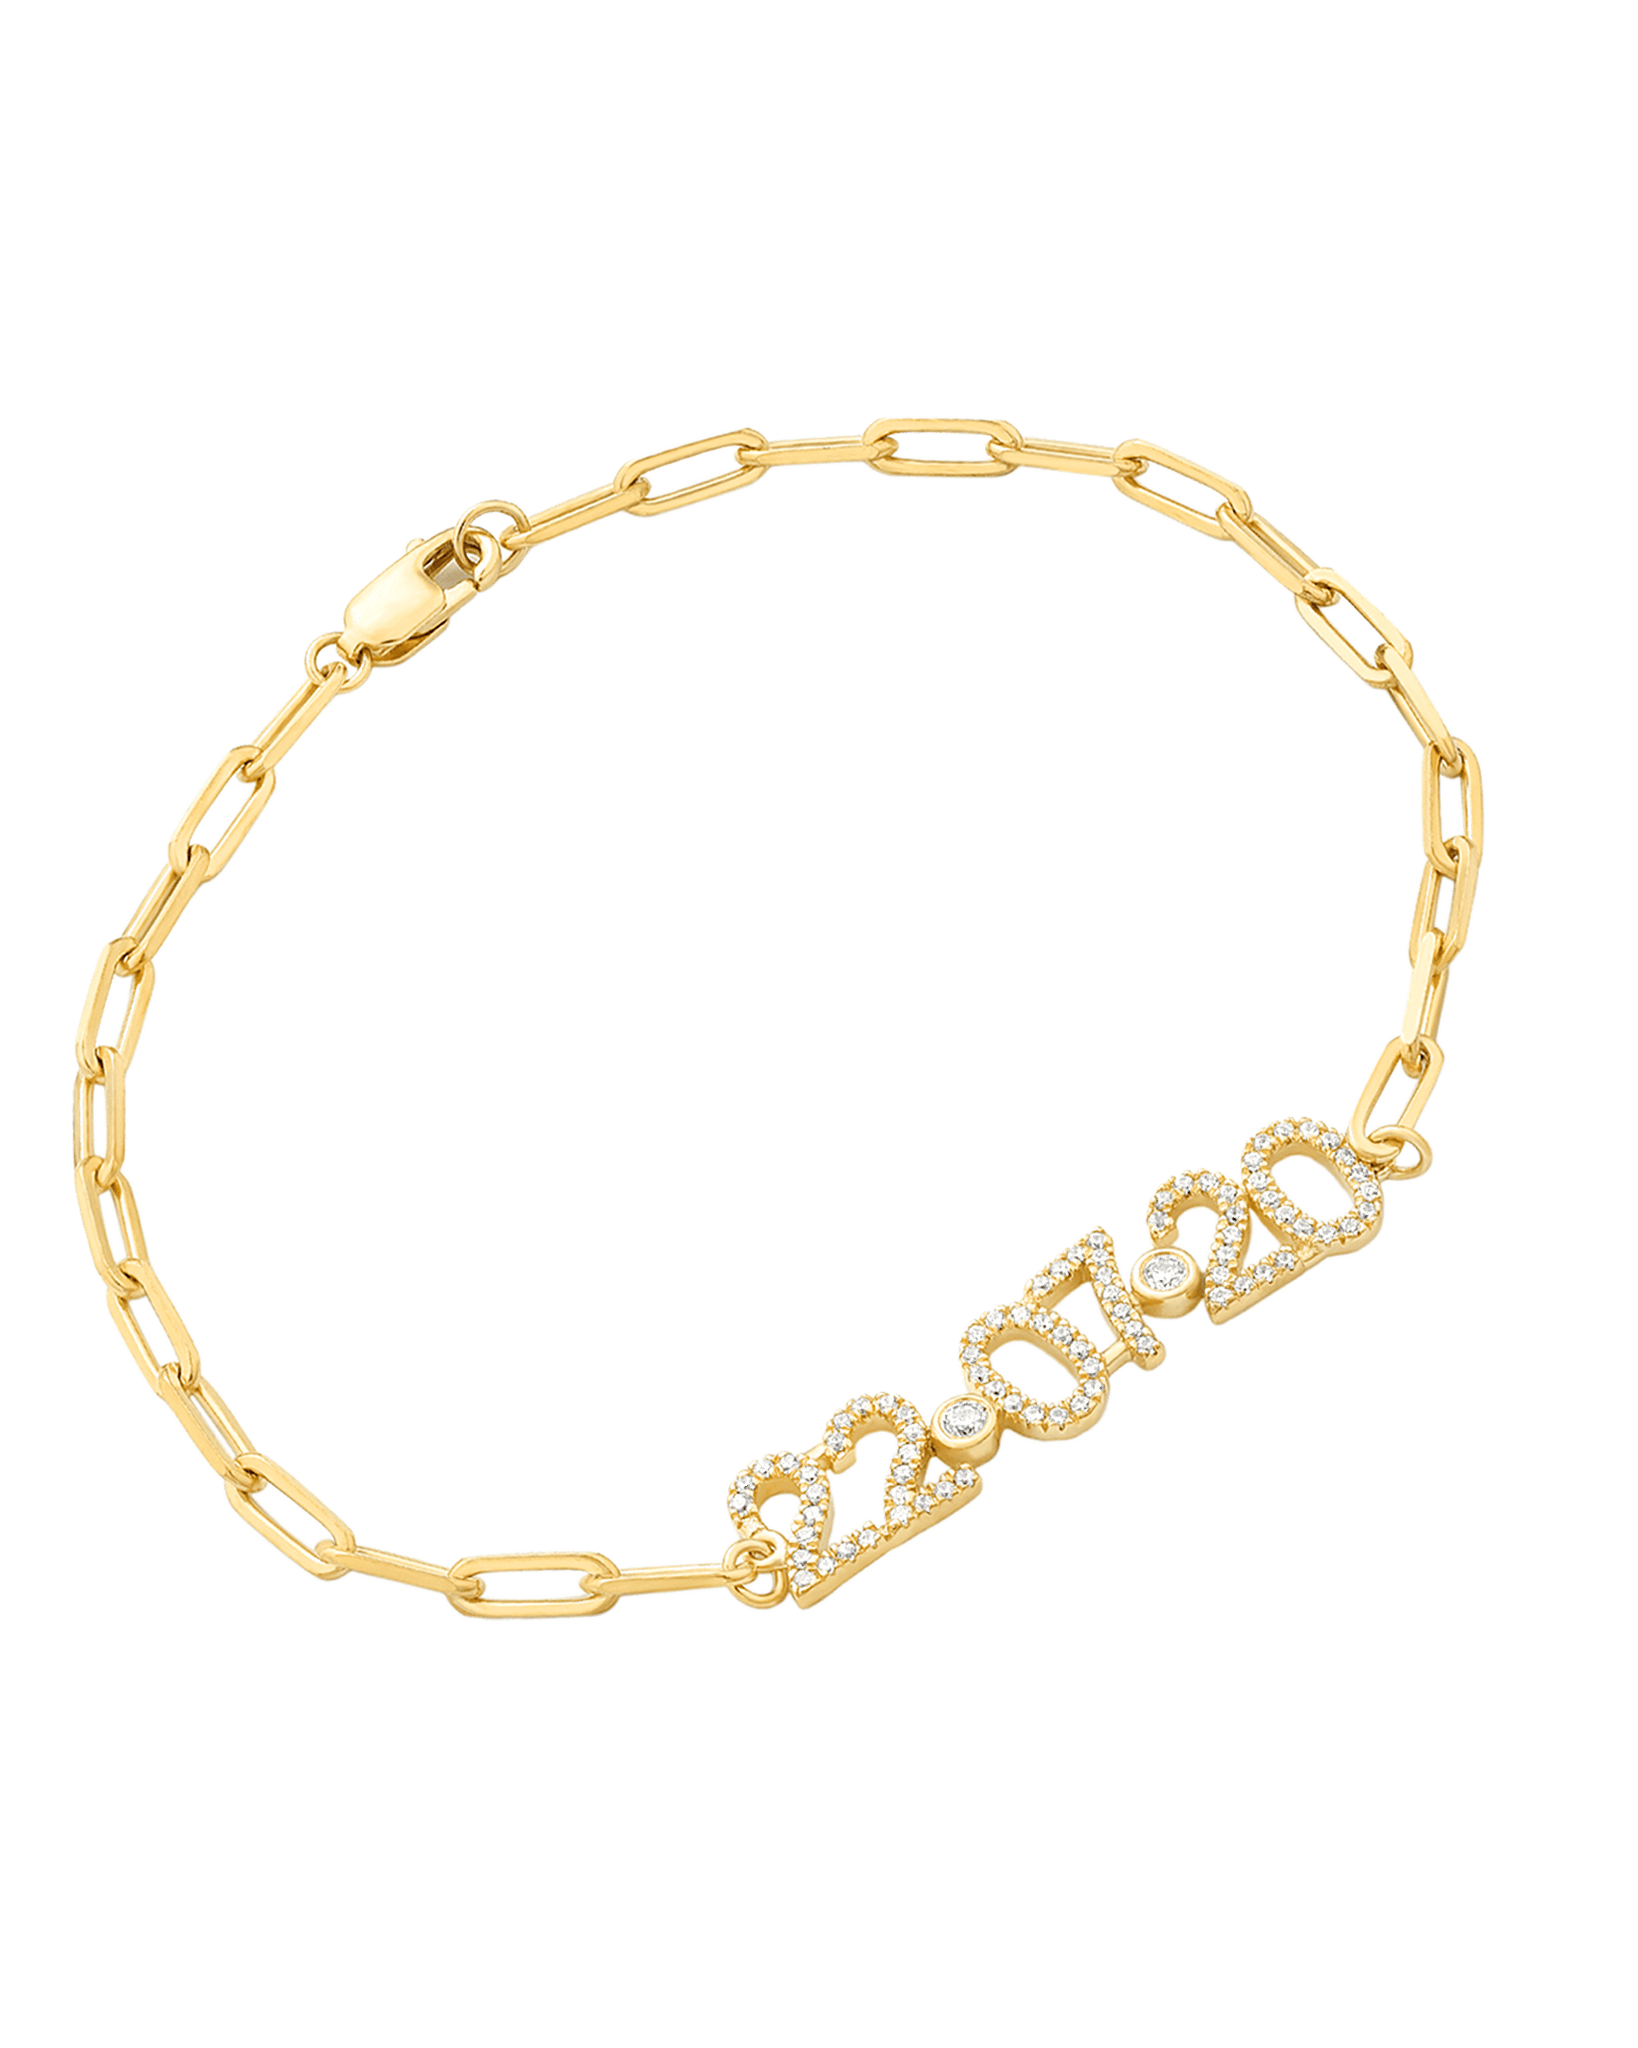 Birthdate Diamond Paved Bracelet - 14K White Gold Bracelets magal-dev 